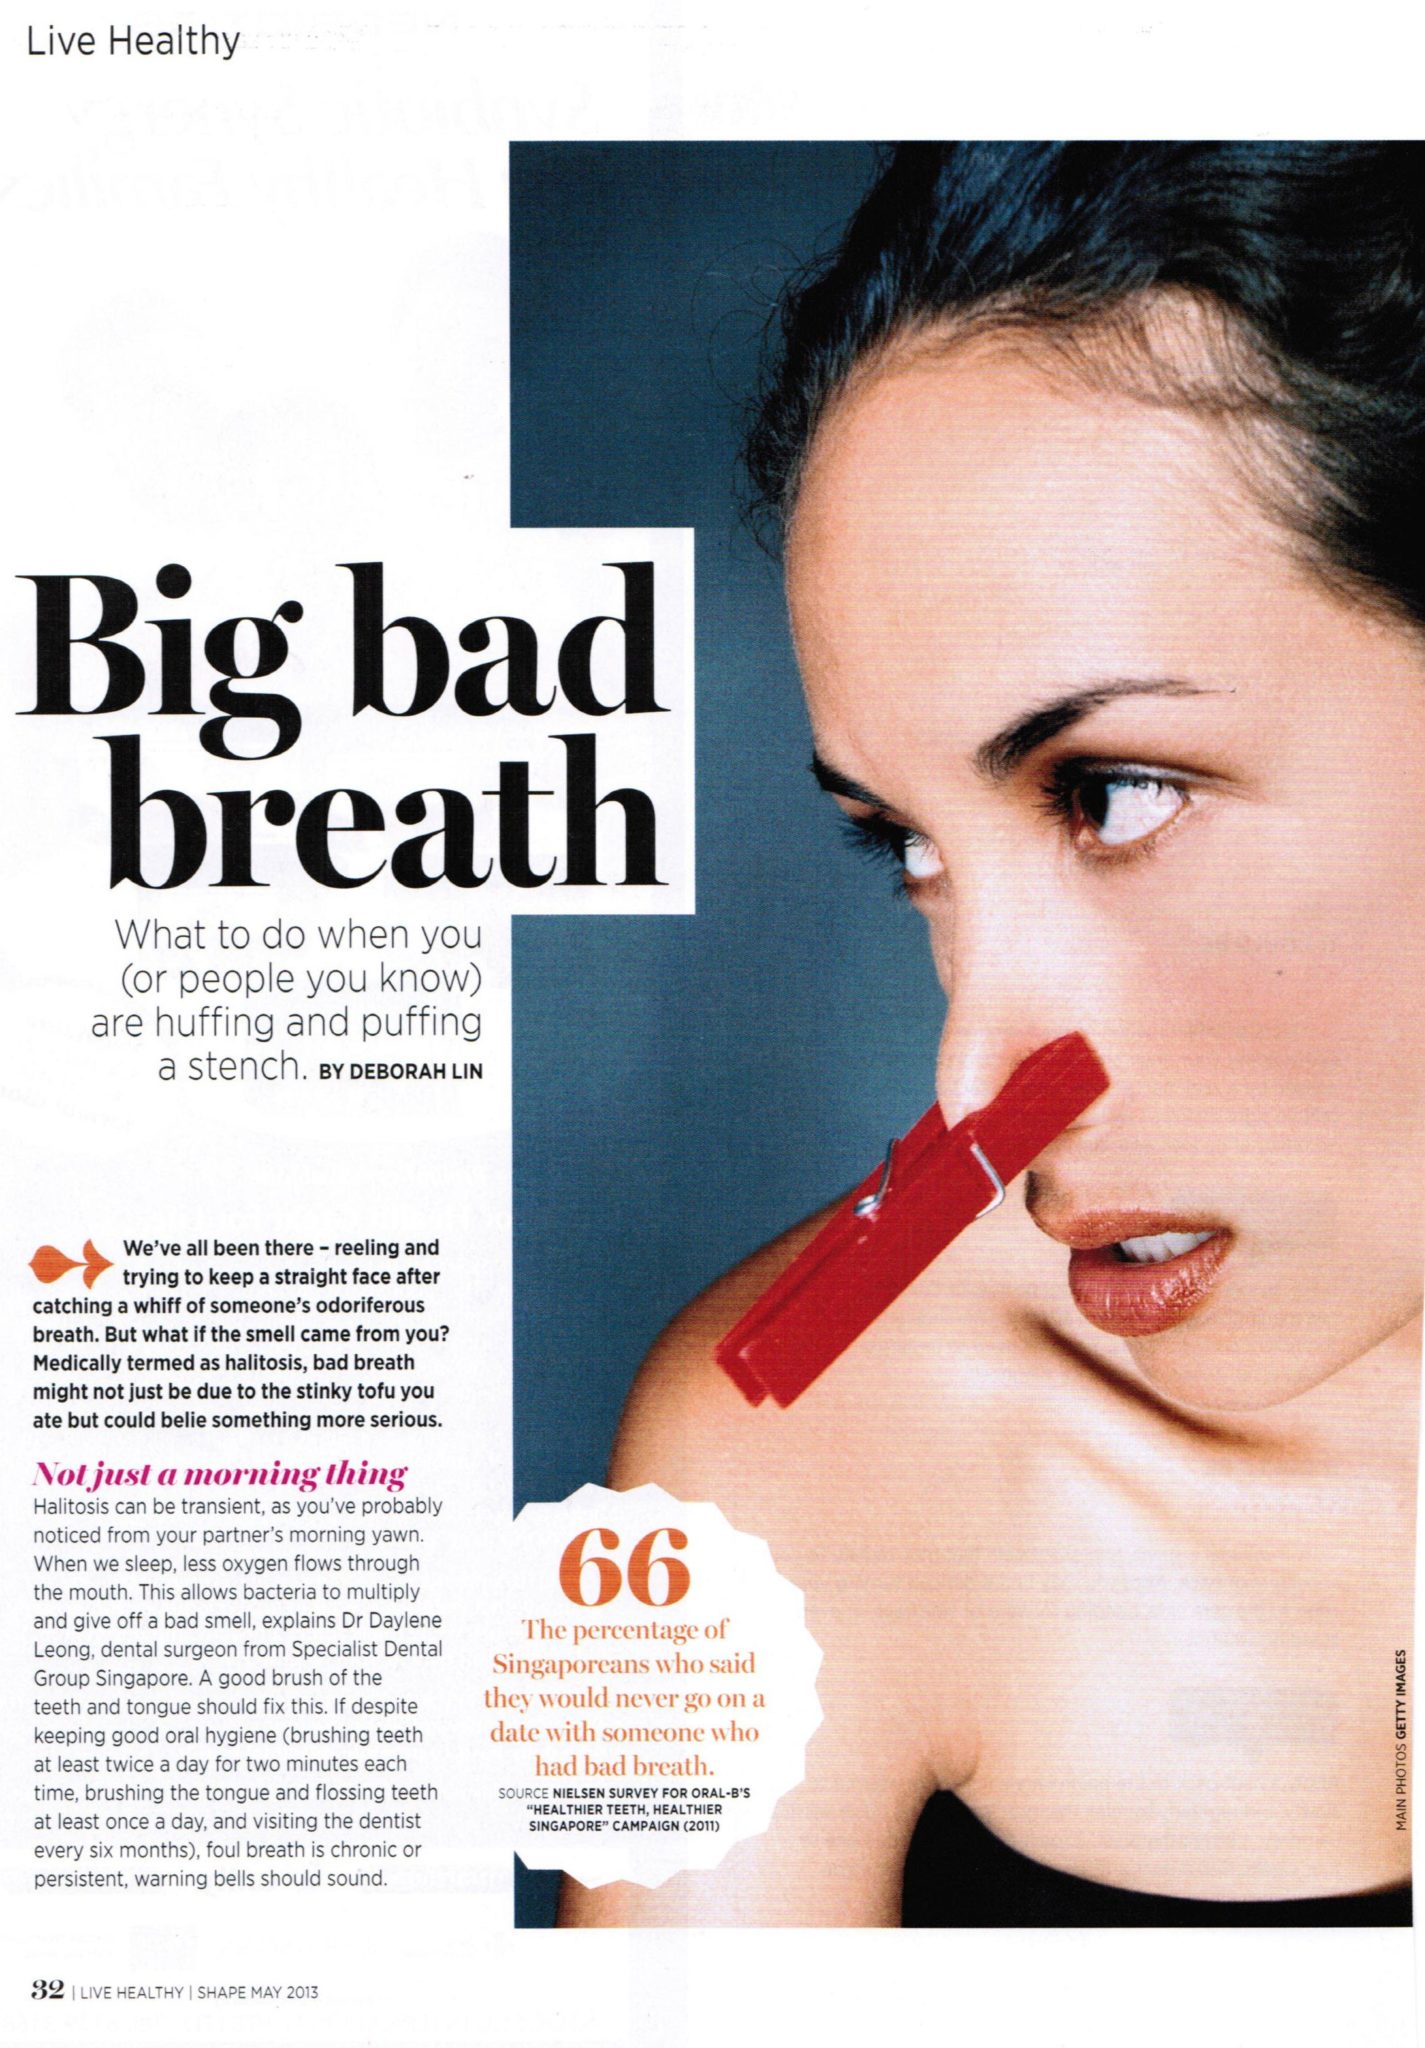 Shape Magazine, May 2013 issue: “Big Bad Breath” (id)